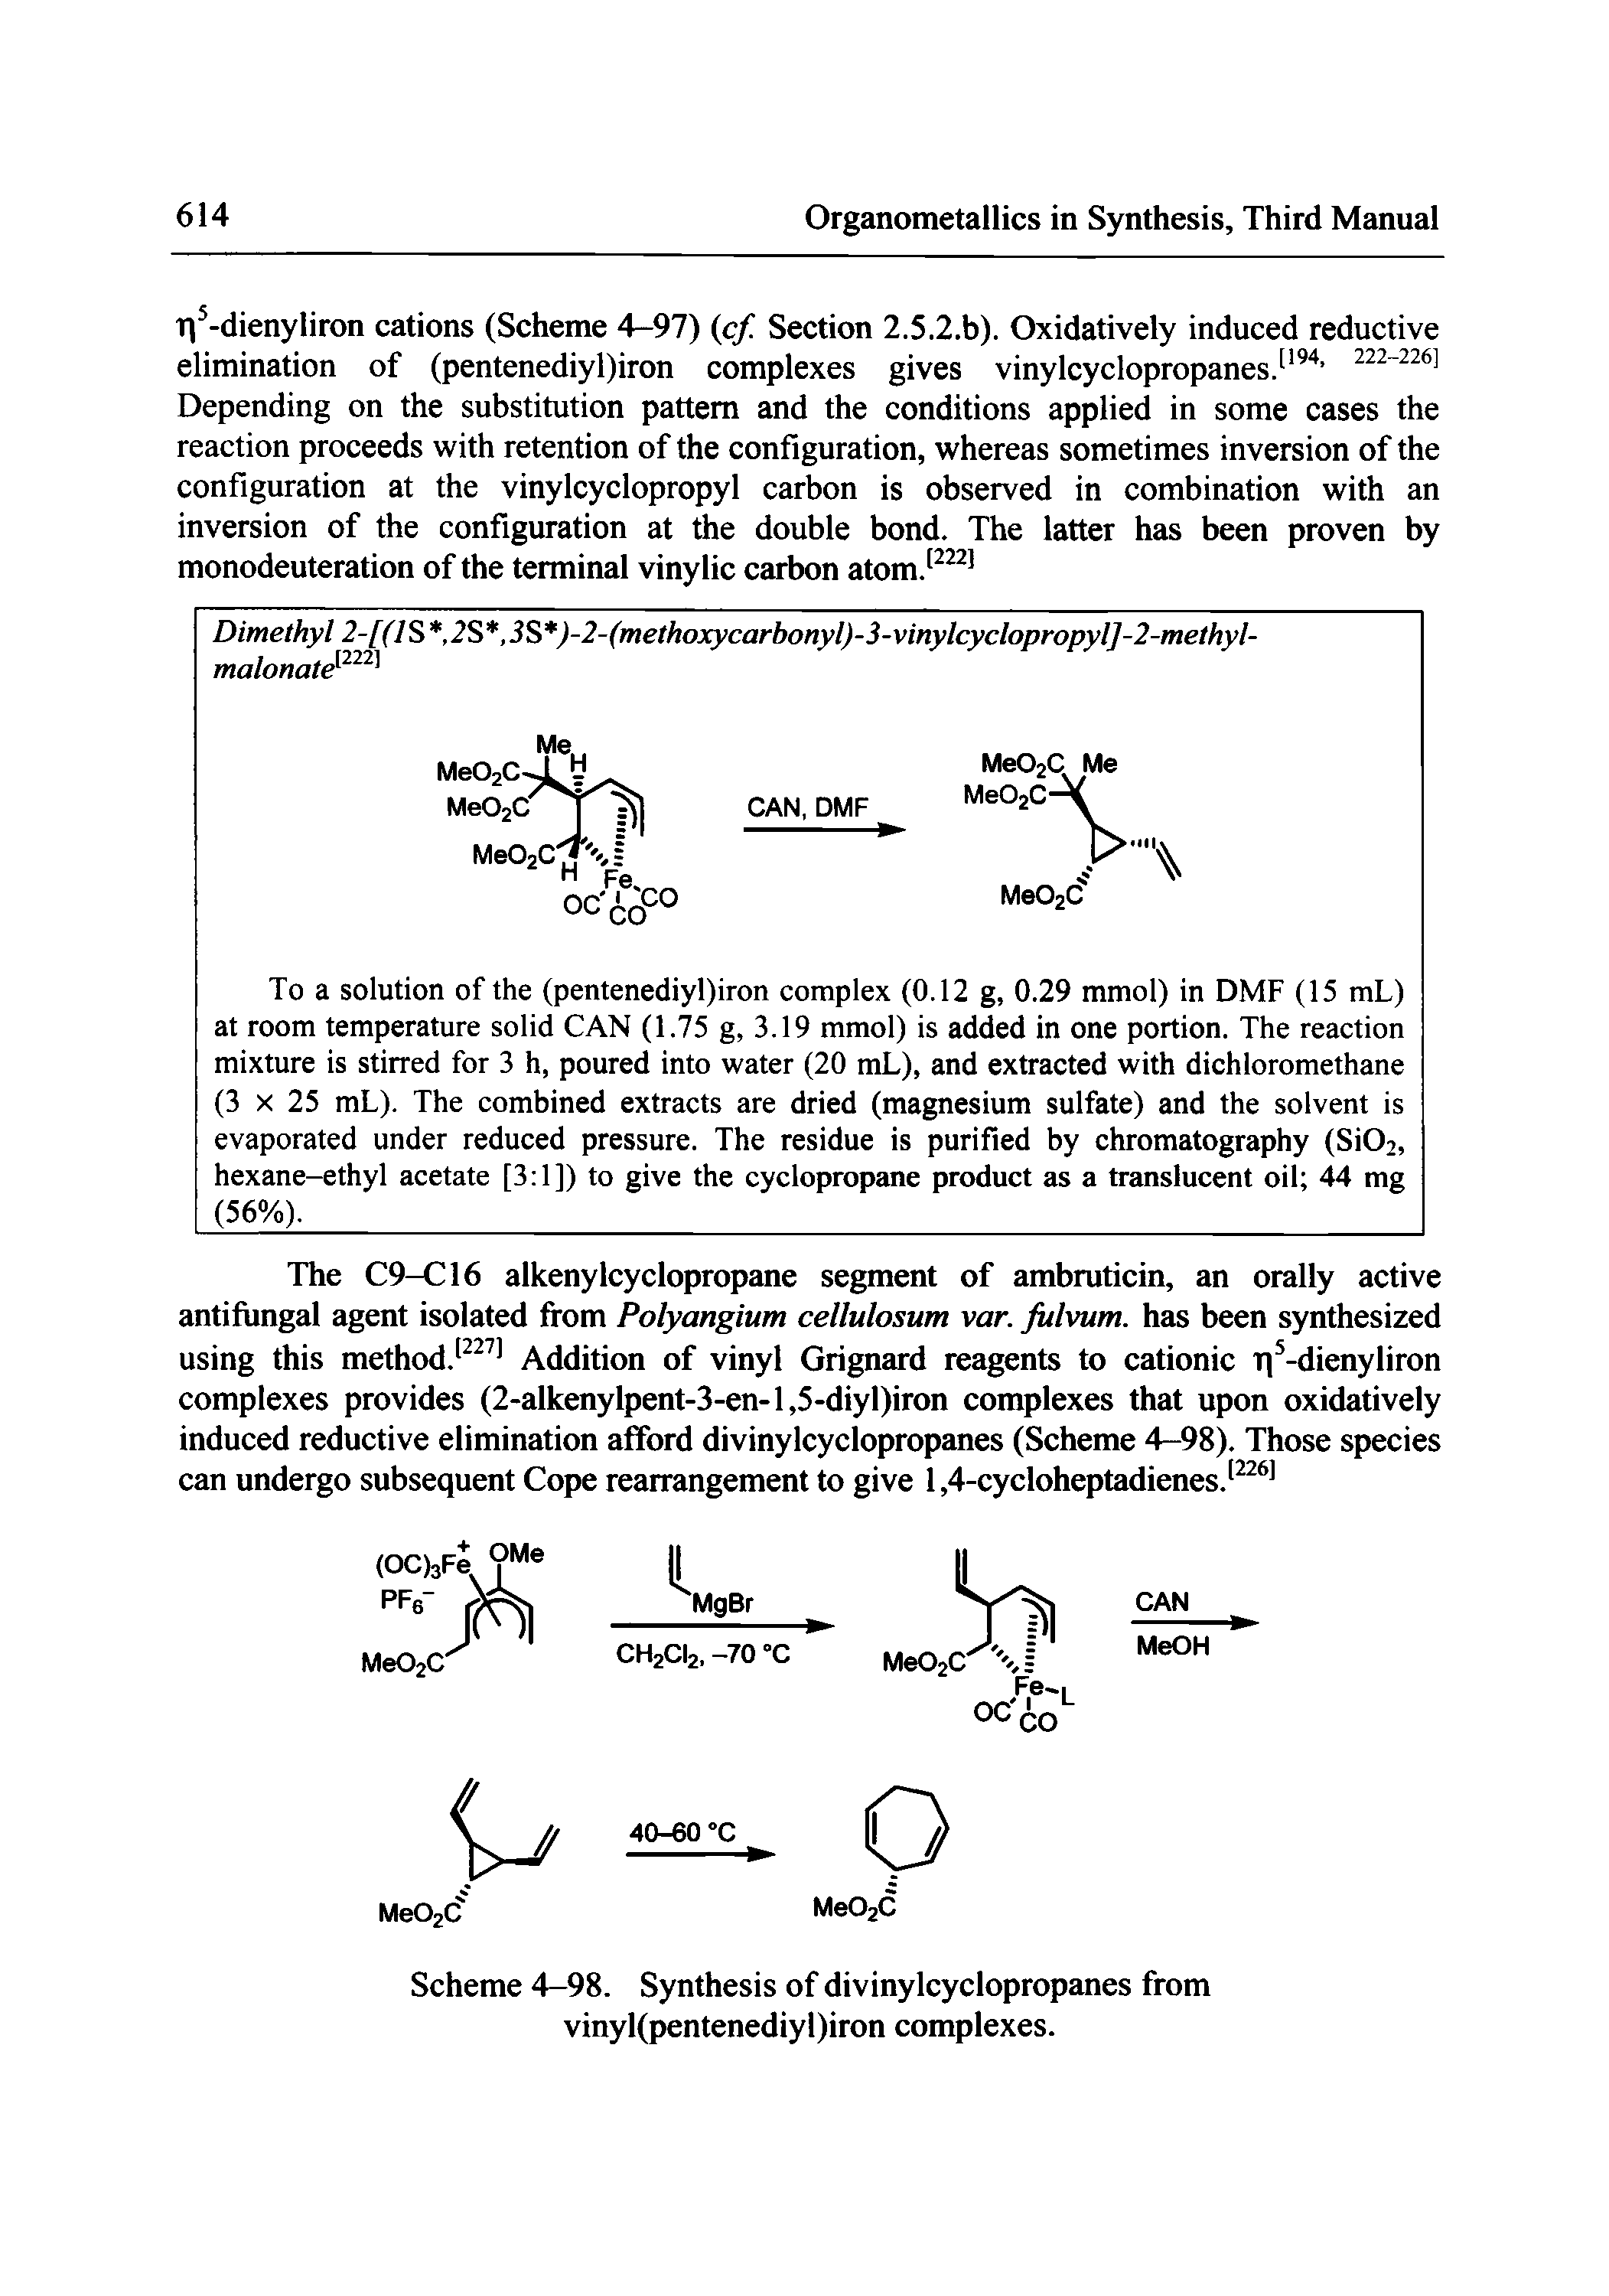 Scheme 4-98. Synthesis of divinylcyclopropanes from vinyl(pentenediyl)iron complexes.